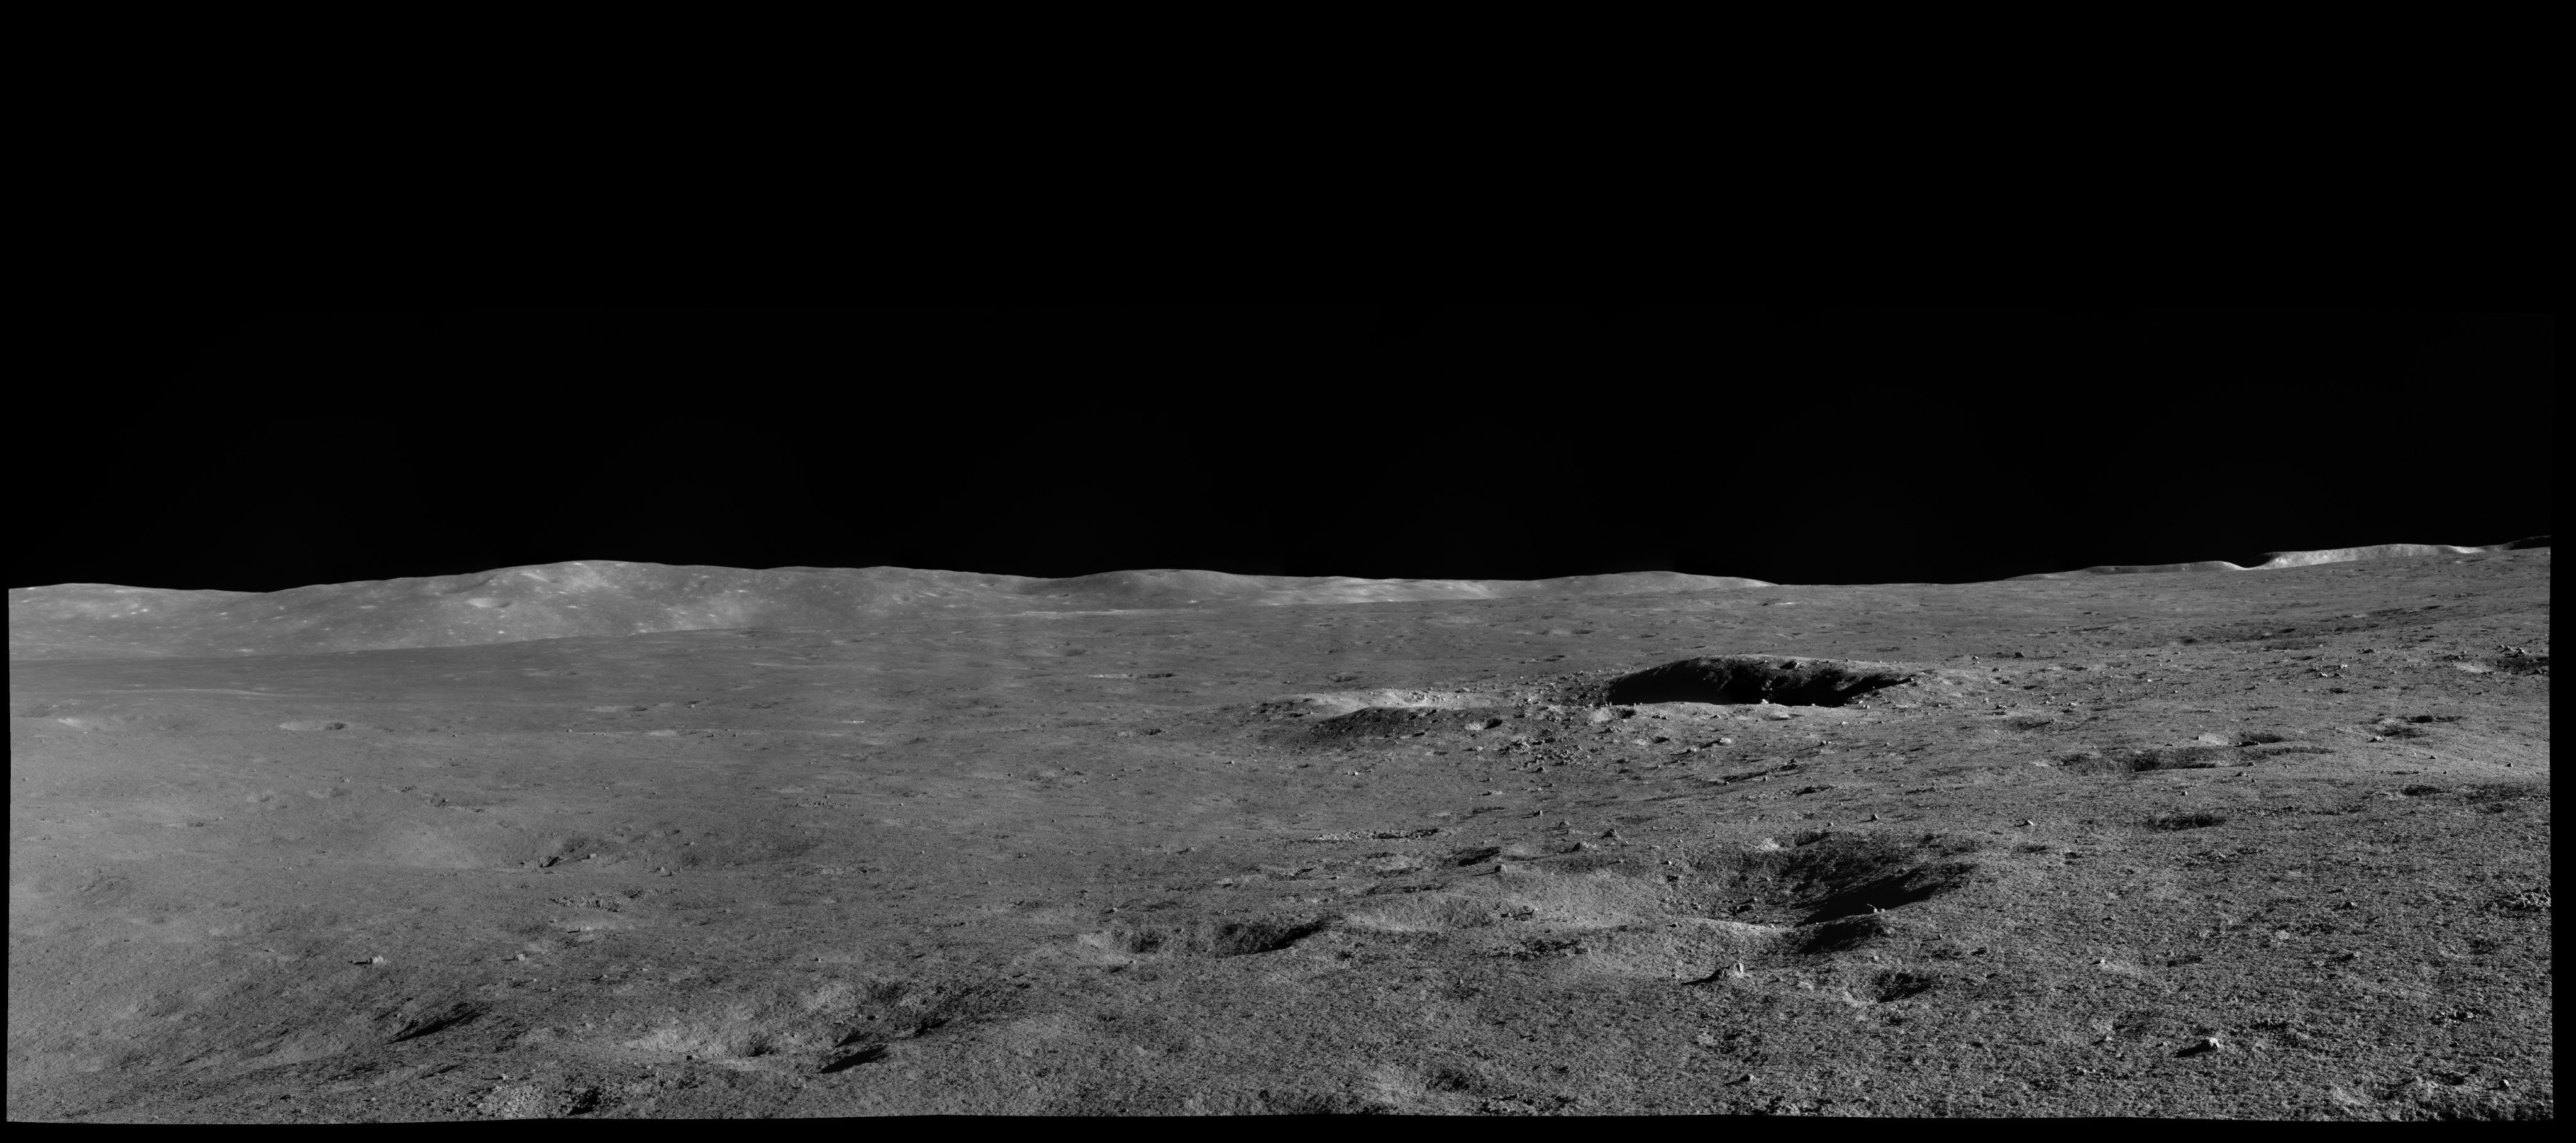 Стоя на поверхности луны. Юйту-2. Луноход Юйту-2. Снимок поверхности Луны. Поверхность Луны ландшафт.